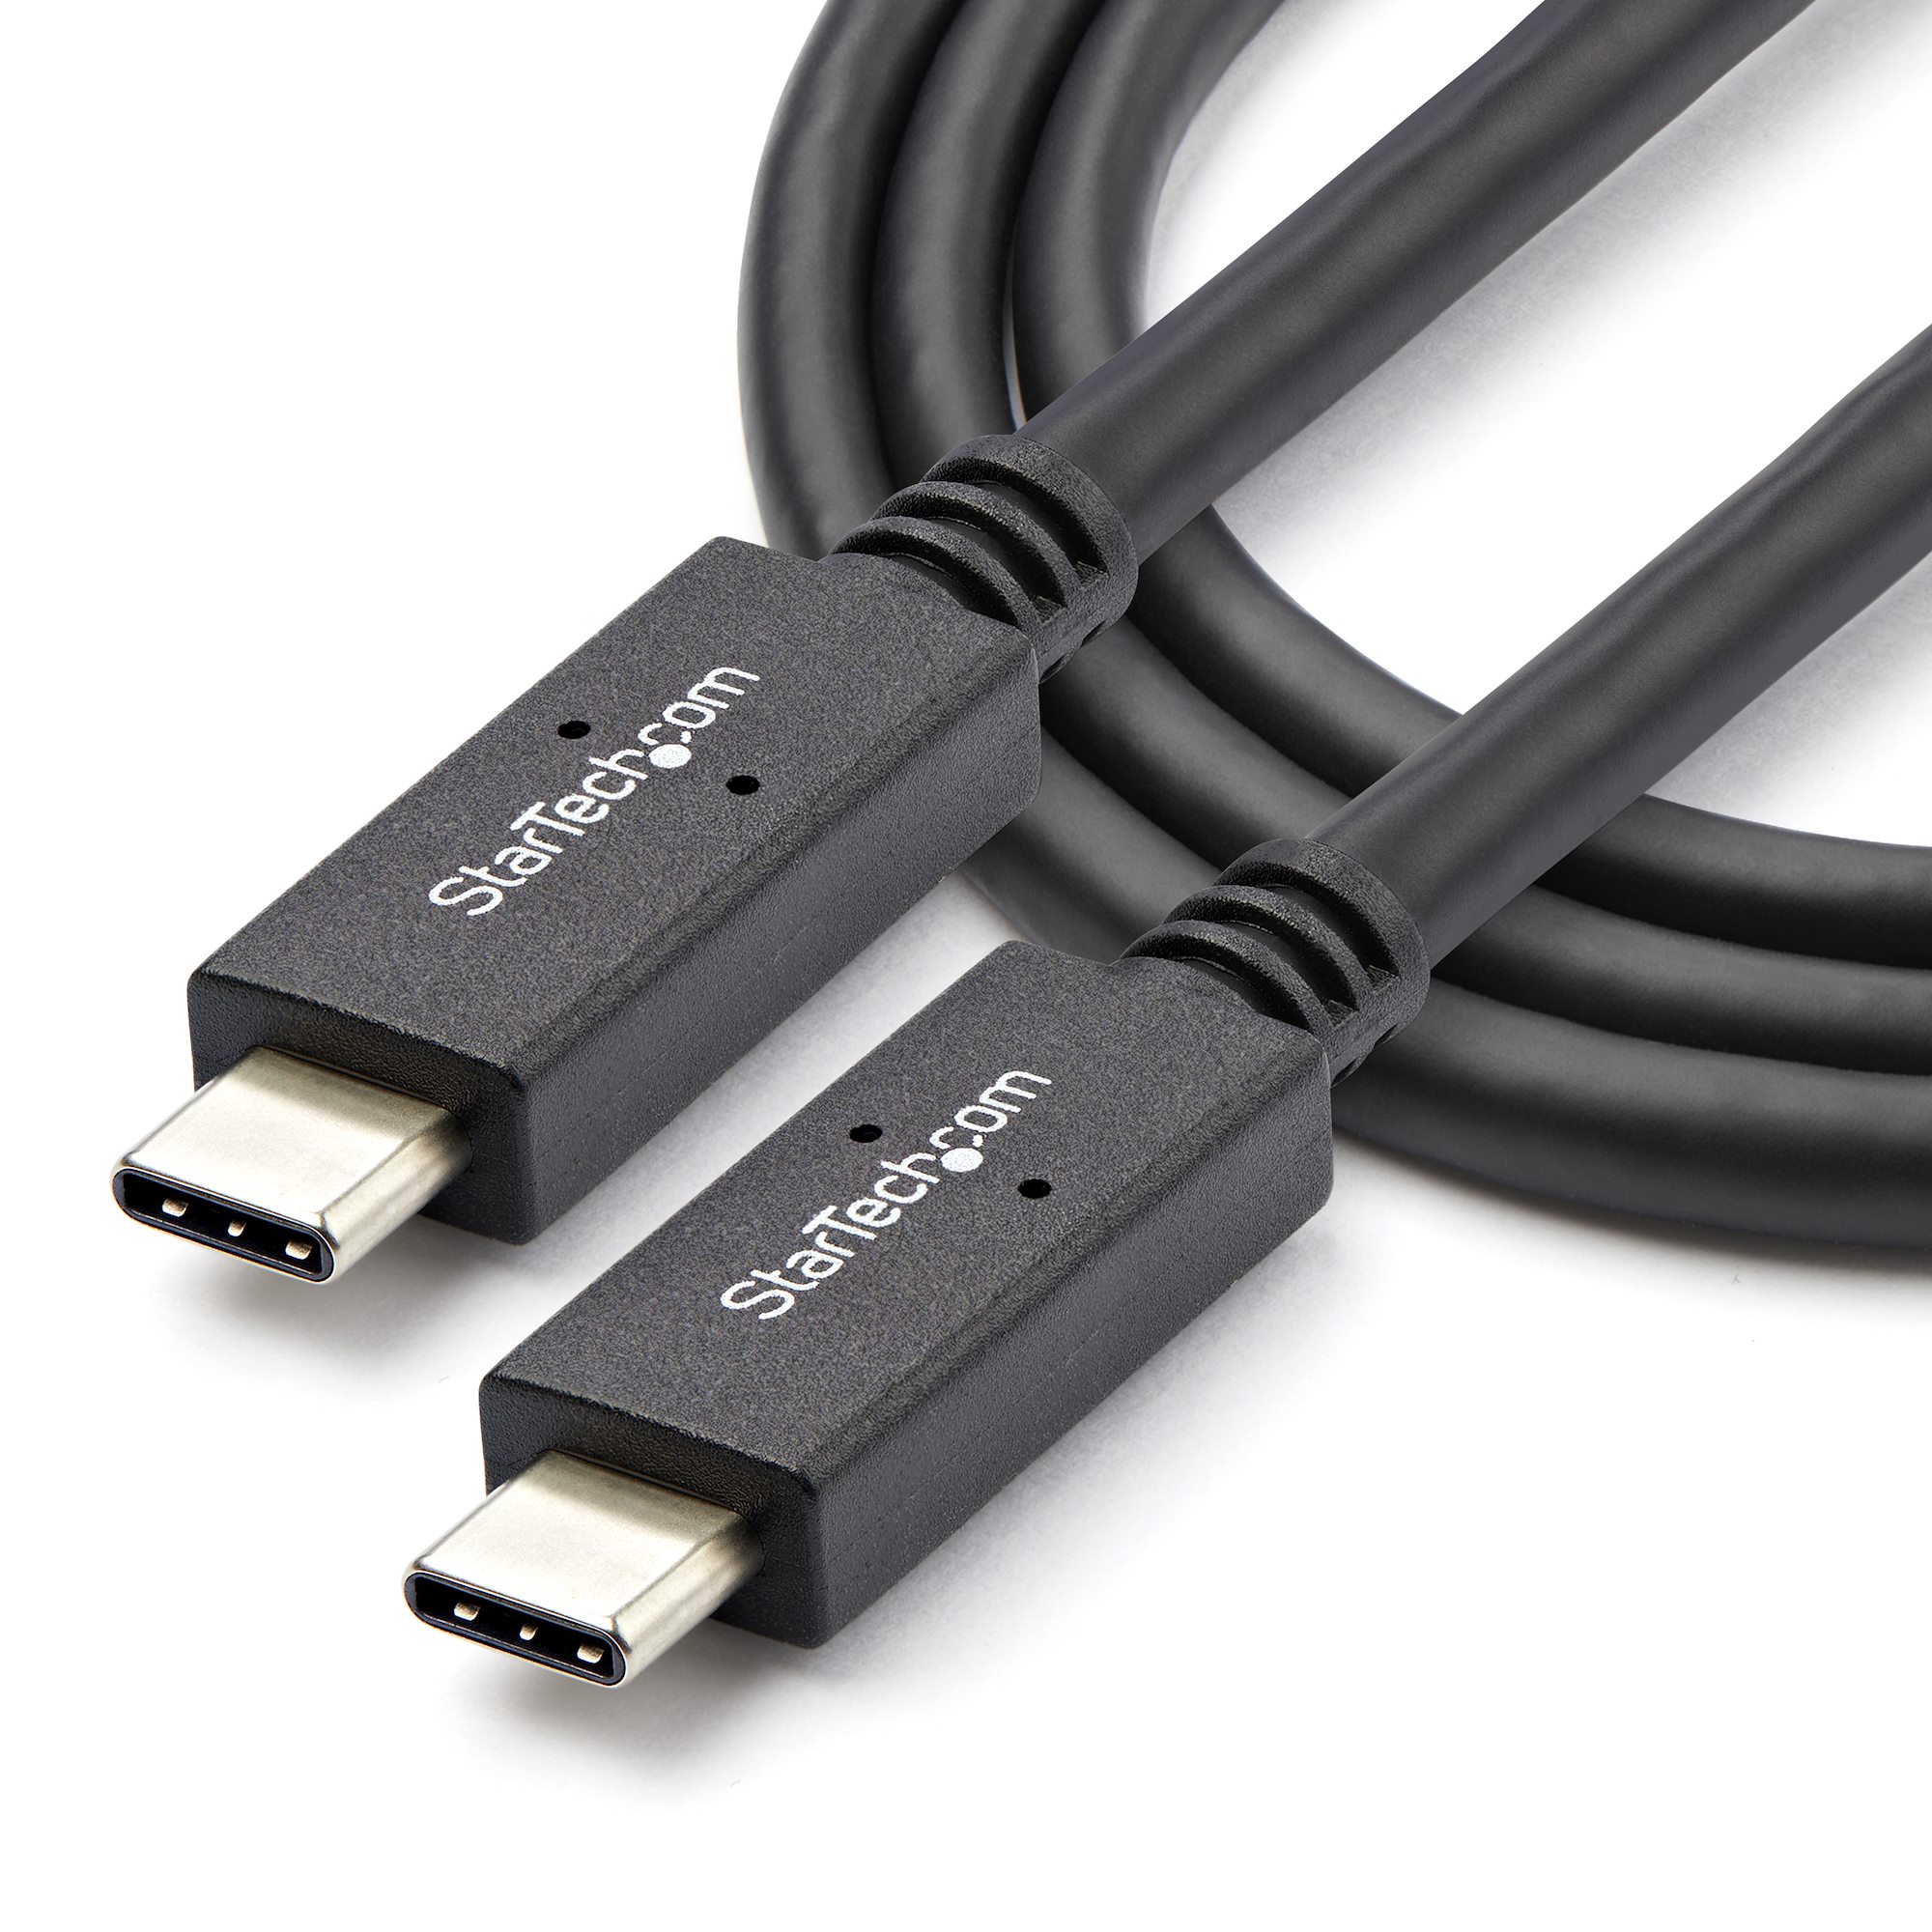 Thunderbolt 3 Cable (USB-C to USB-C) (3.3-ft/1-m) (USB Type-C)